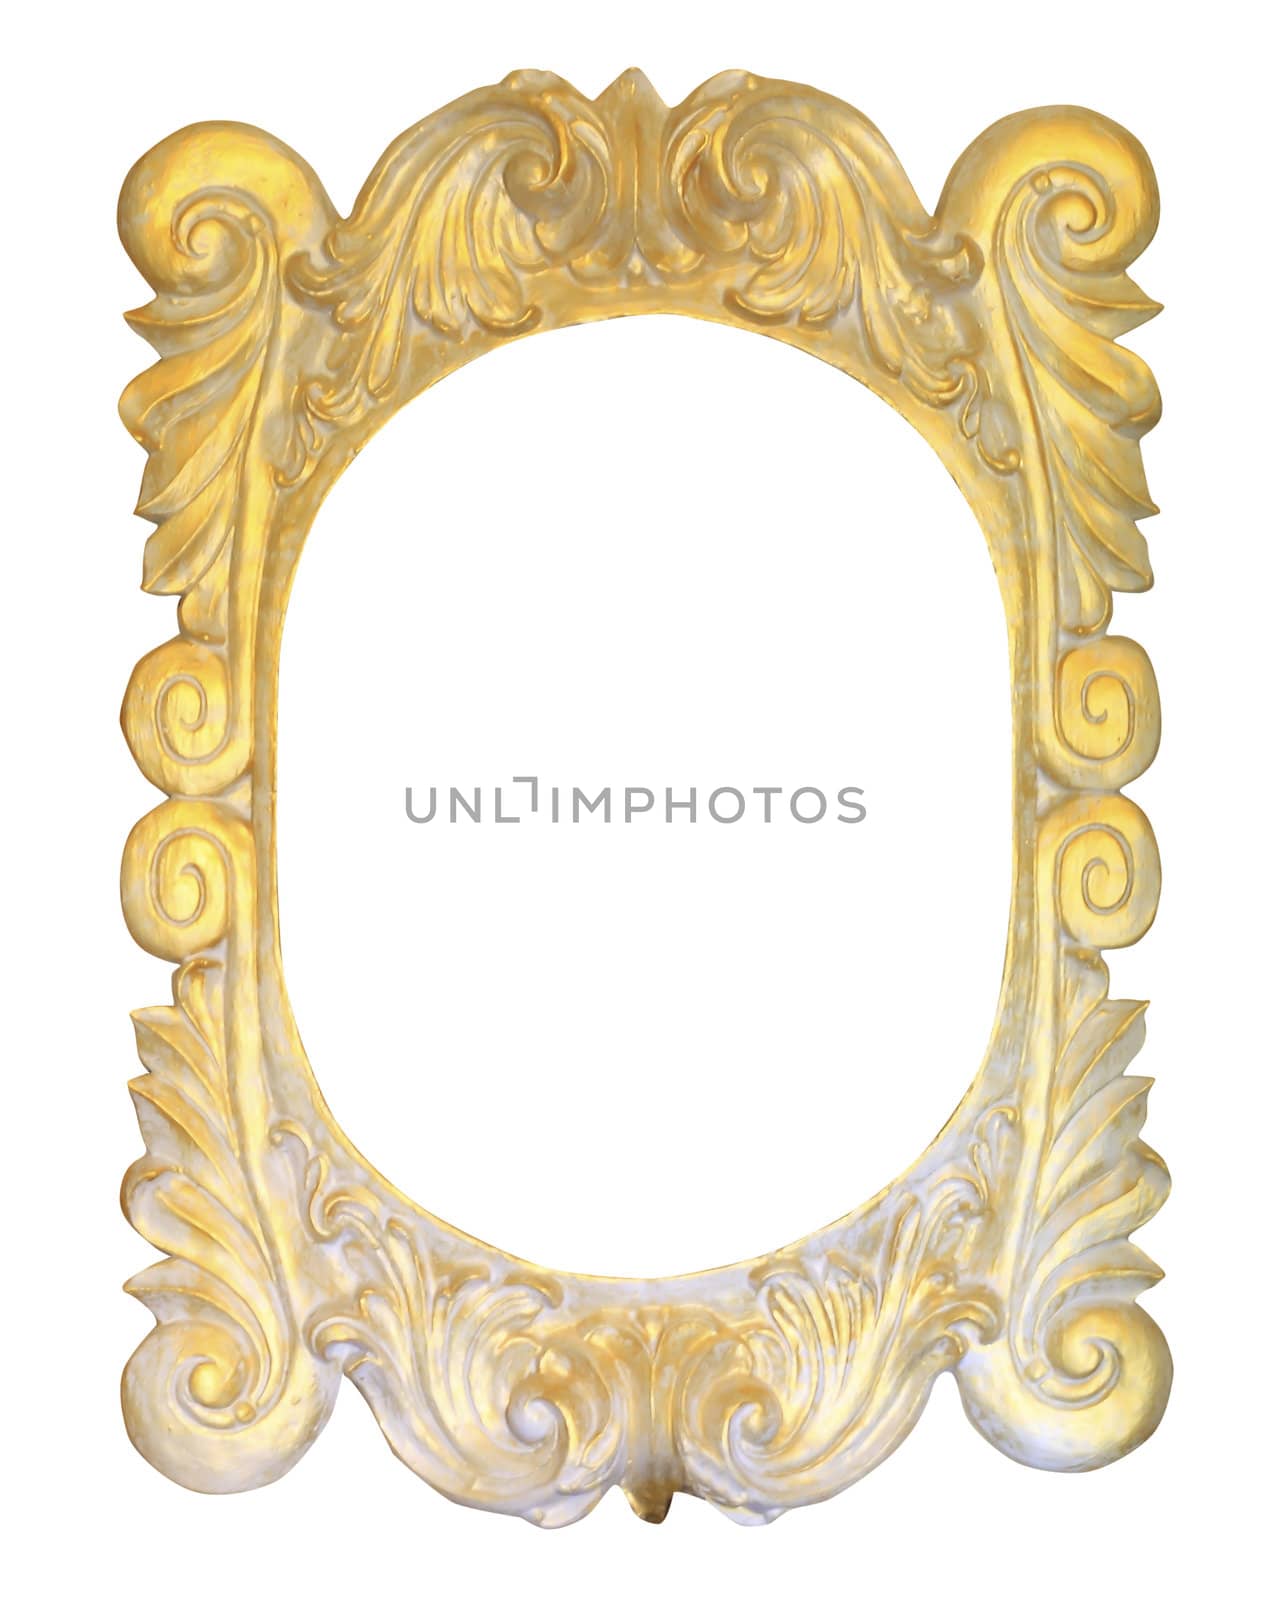 Old gold frame over white background